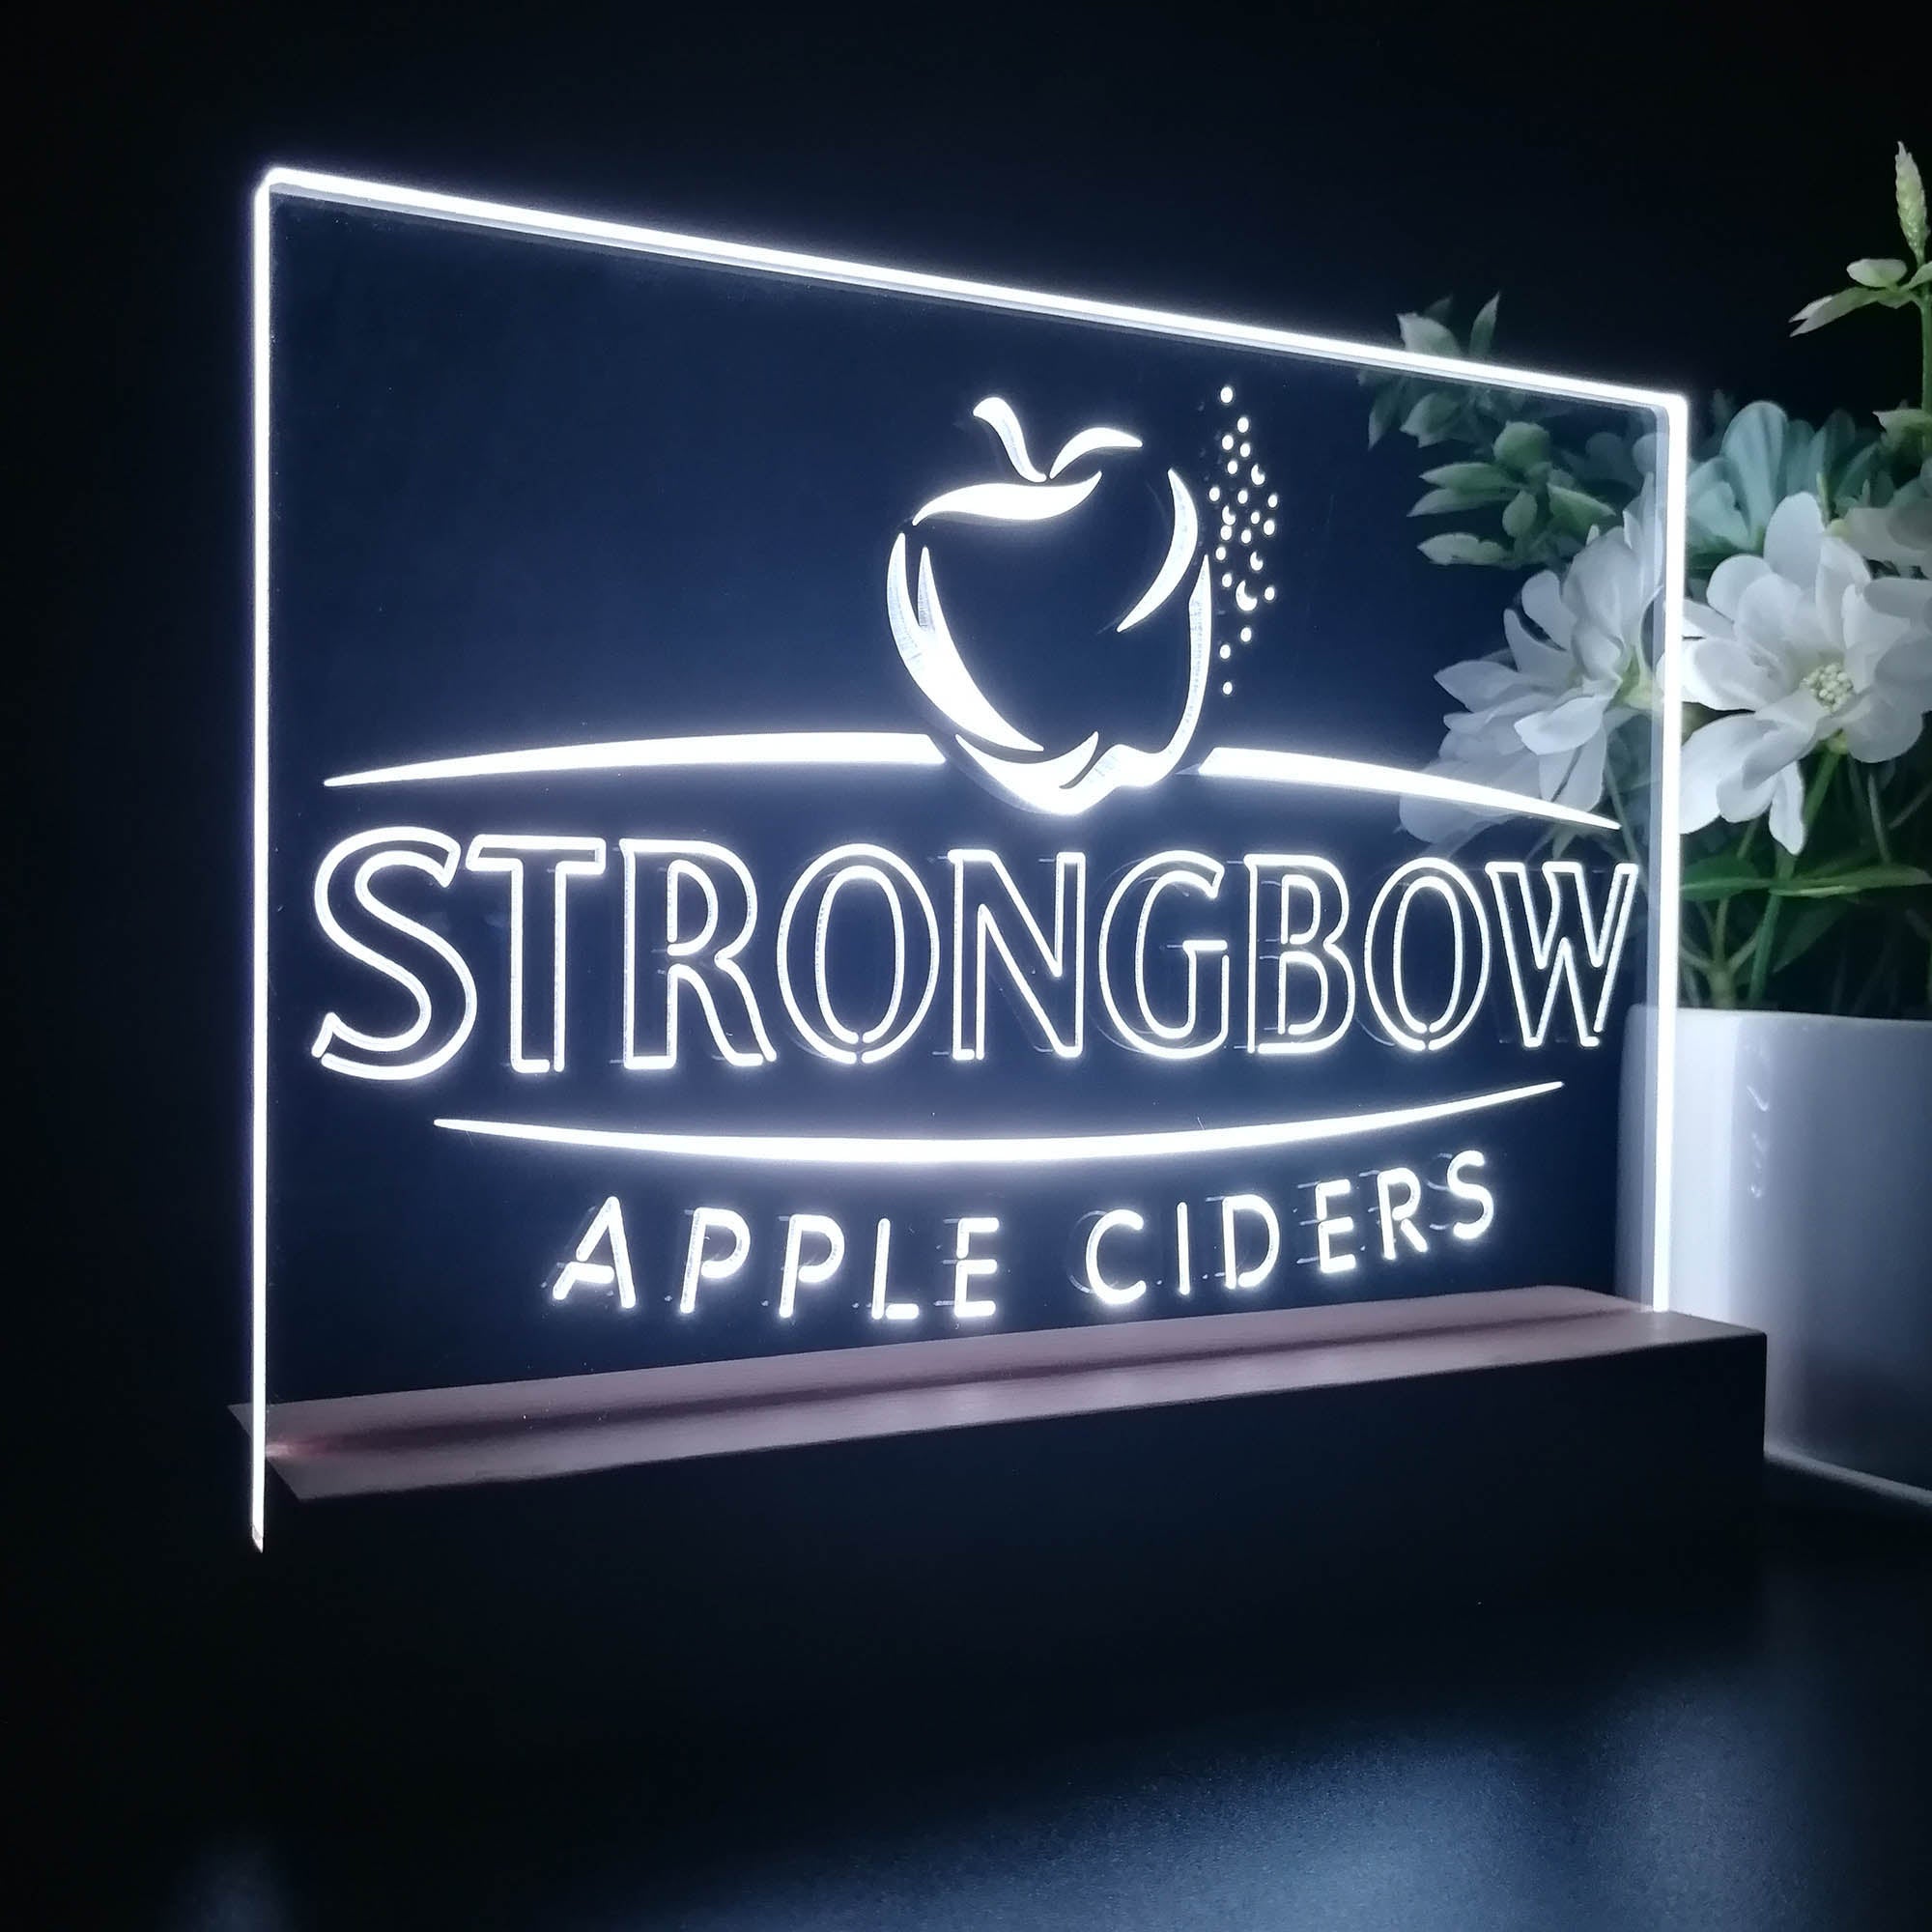 Strongbow Apple Ciders Neon Sign Pub Bar Decor Lamp